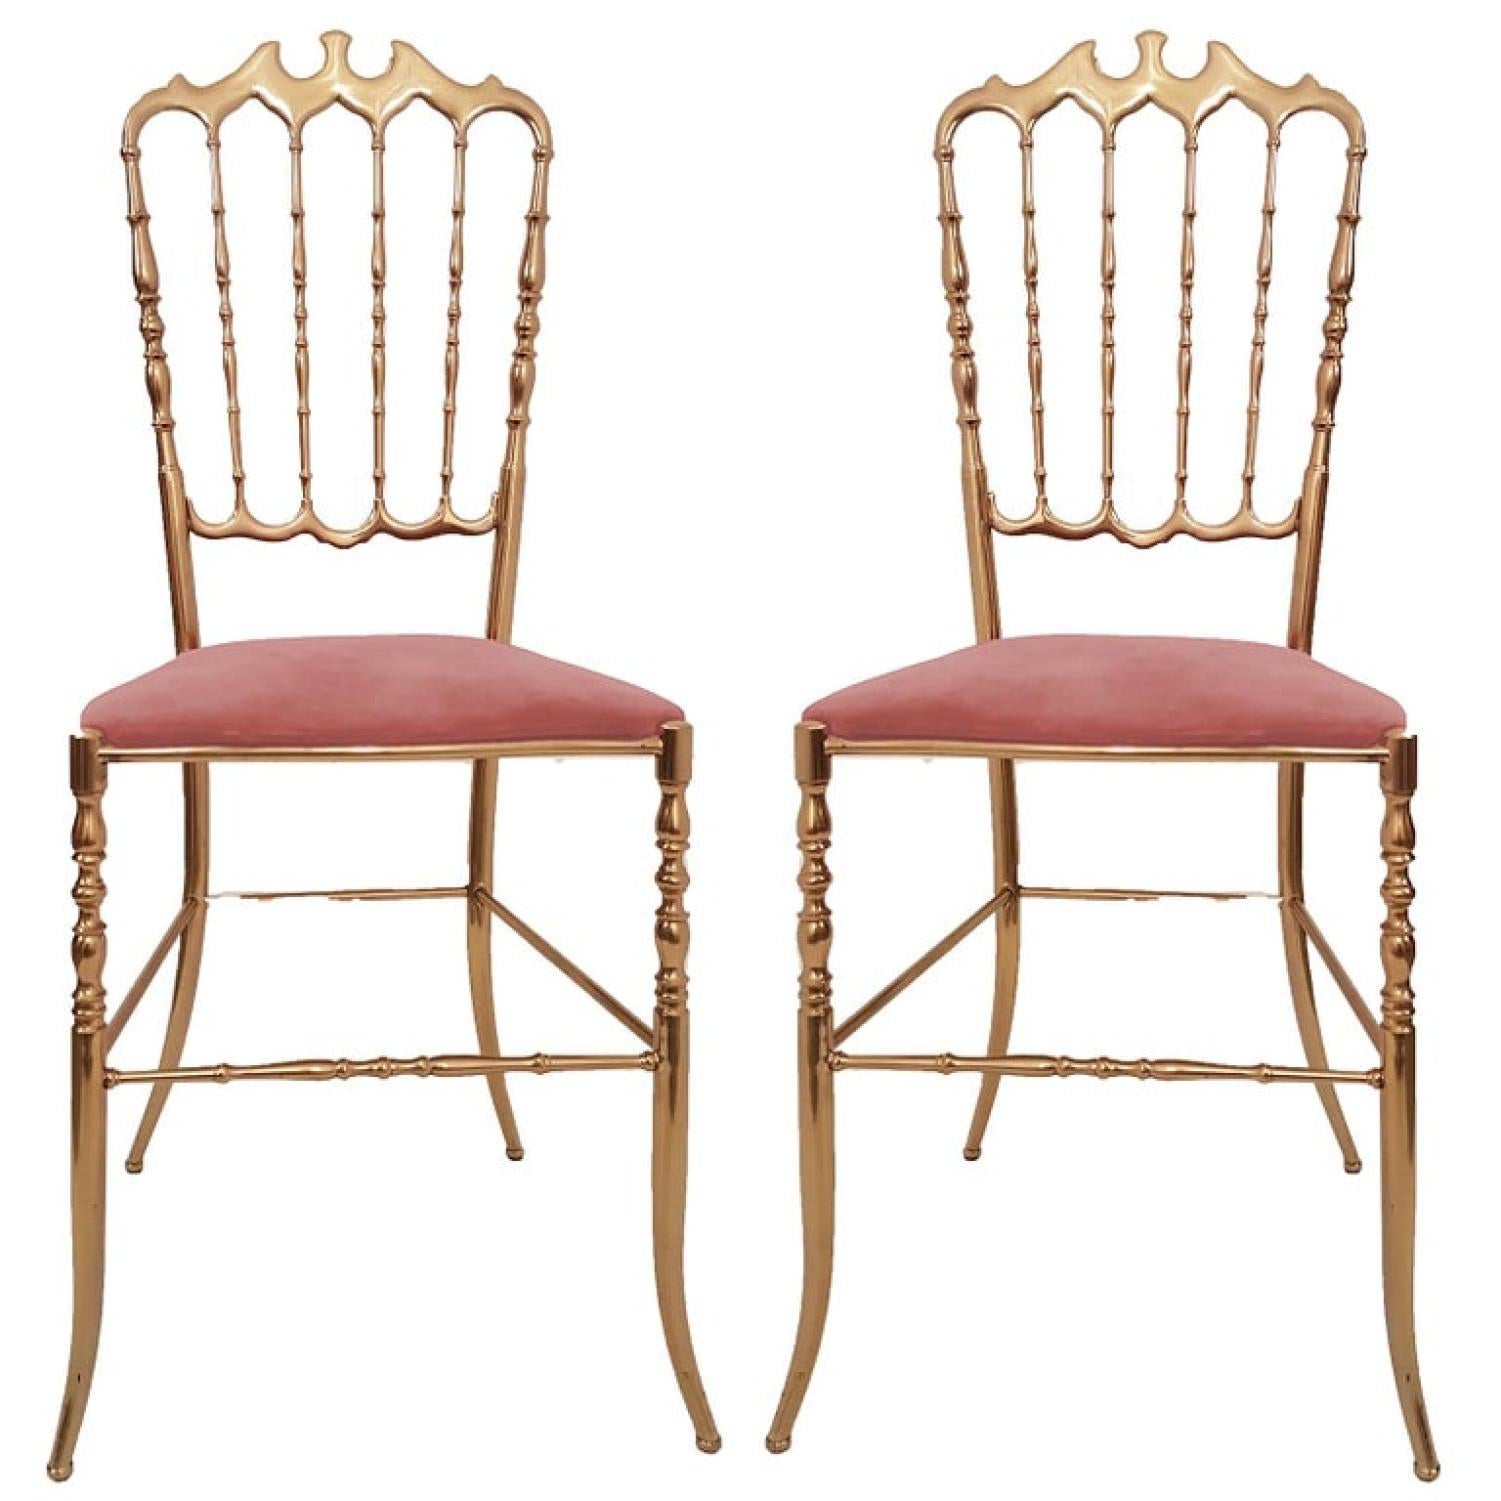 Mid-Century Modern Pair of Italian Massive Brass Chairs by Chiavari, Upholstery Pink Velvet